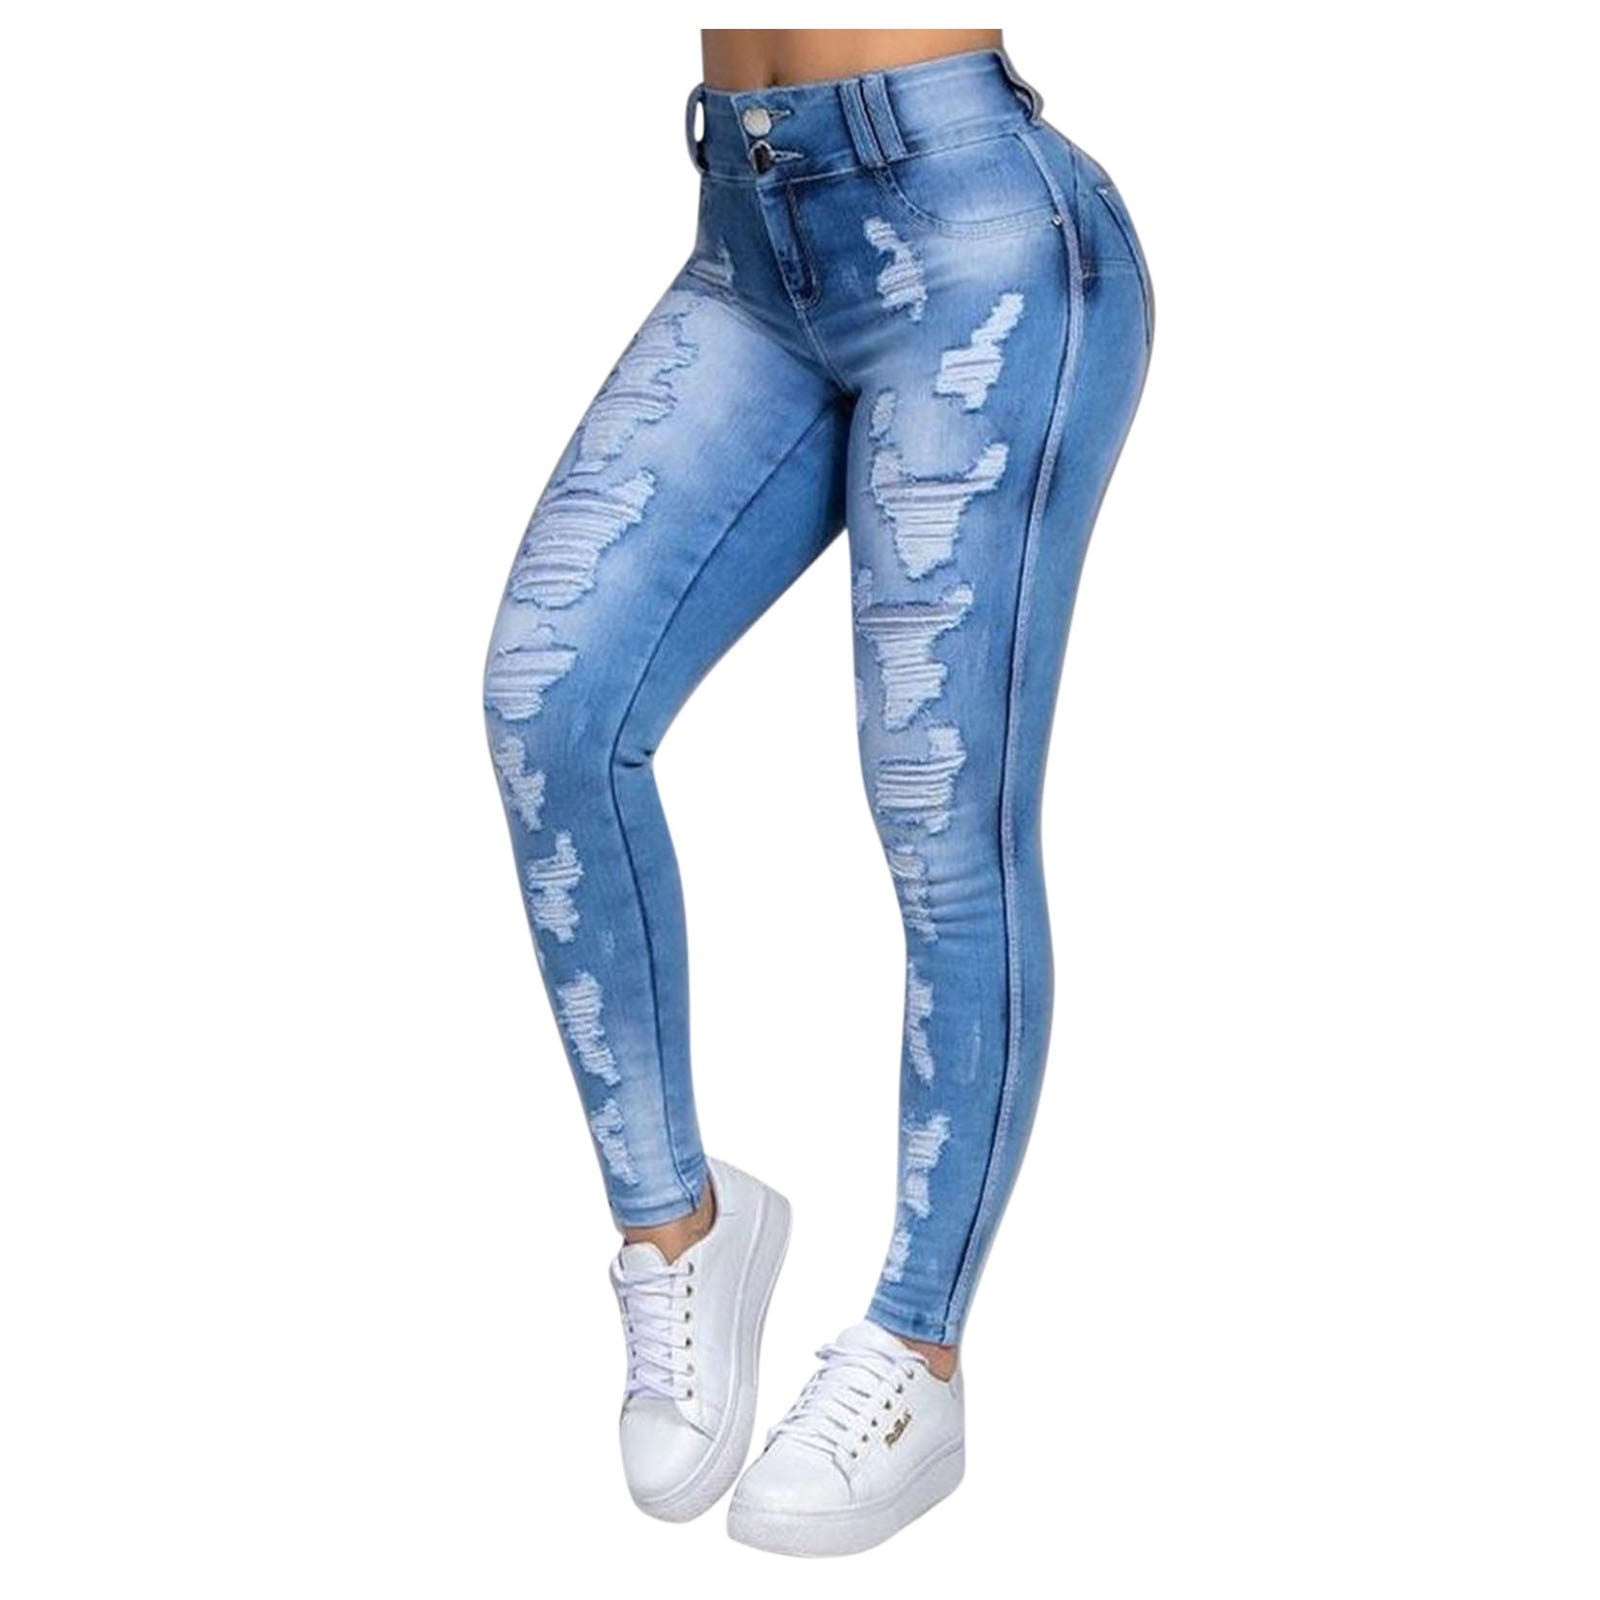 BJUTIR Jeans For Women Hole Skinny Pencil Denim Jeans Stretch Slim ...